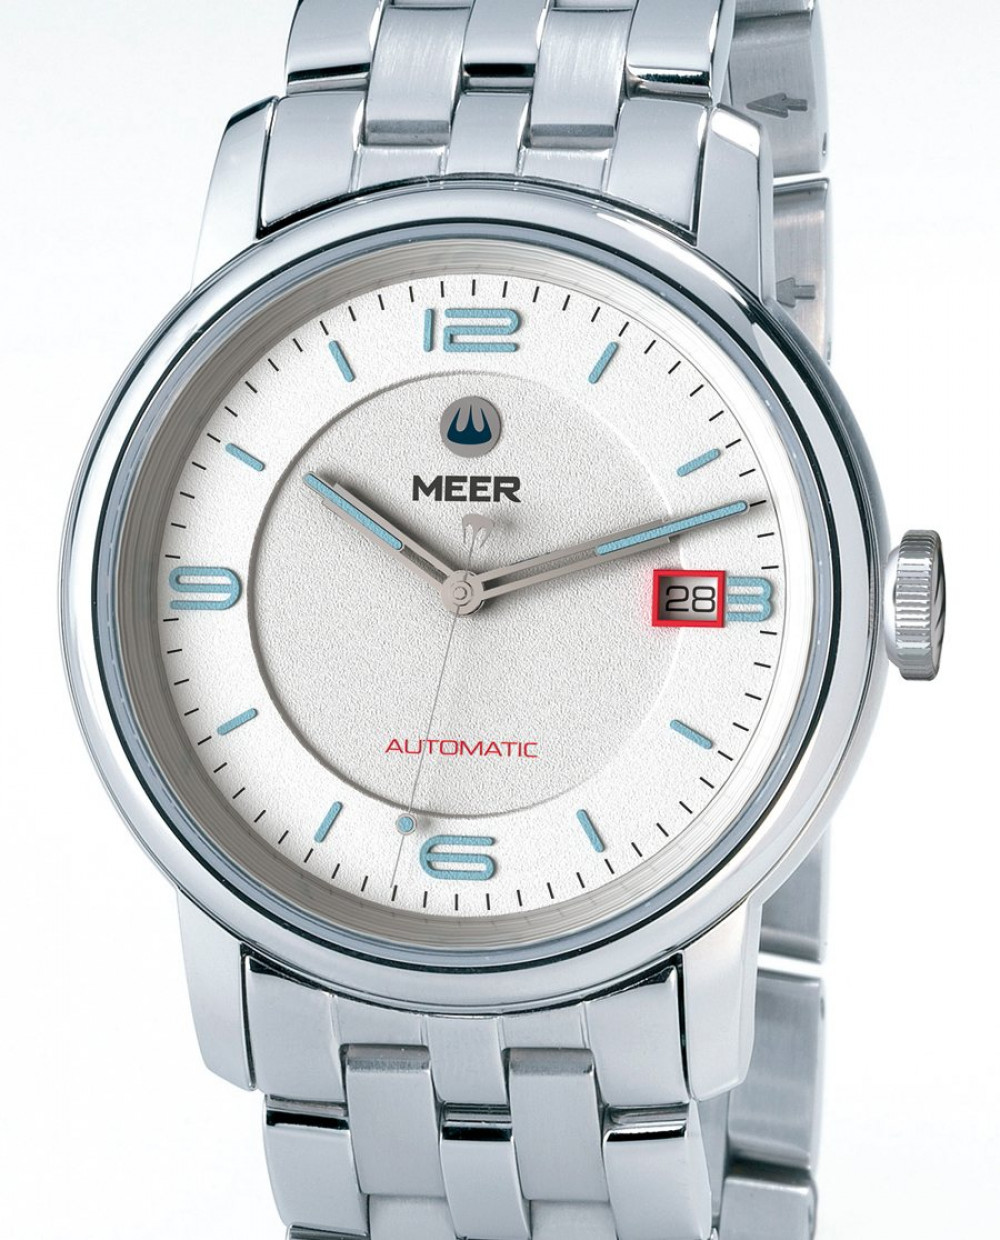 Zegarek firmy Meer, model Delos